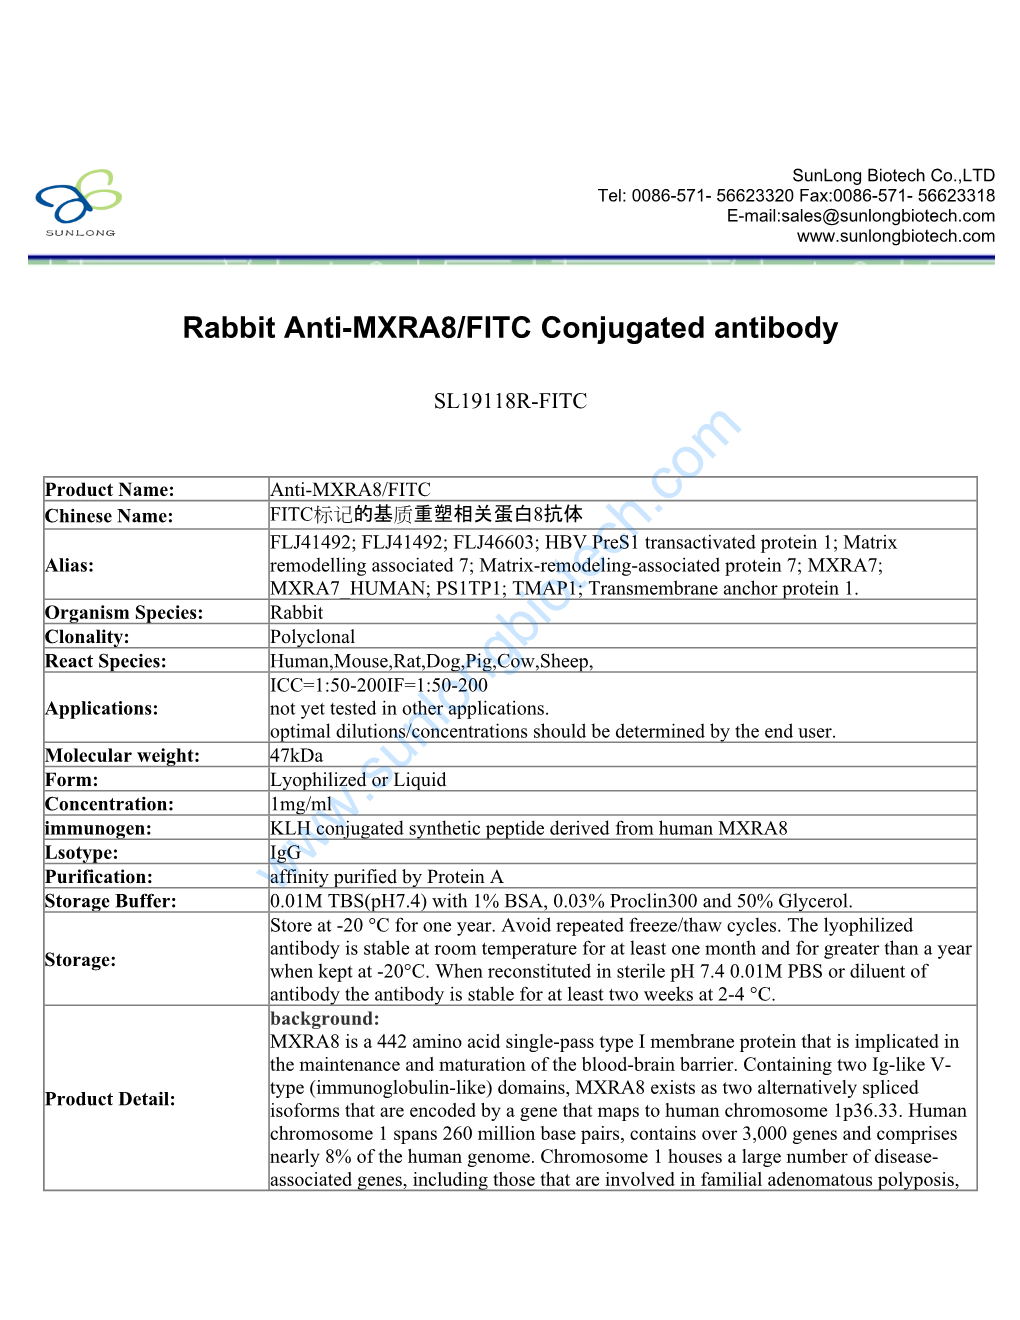 Rabbit Anti-MXRA8/FITC Conjugated Antibody